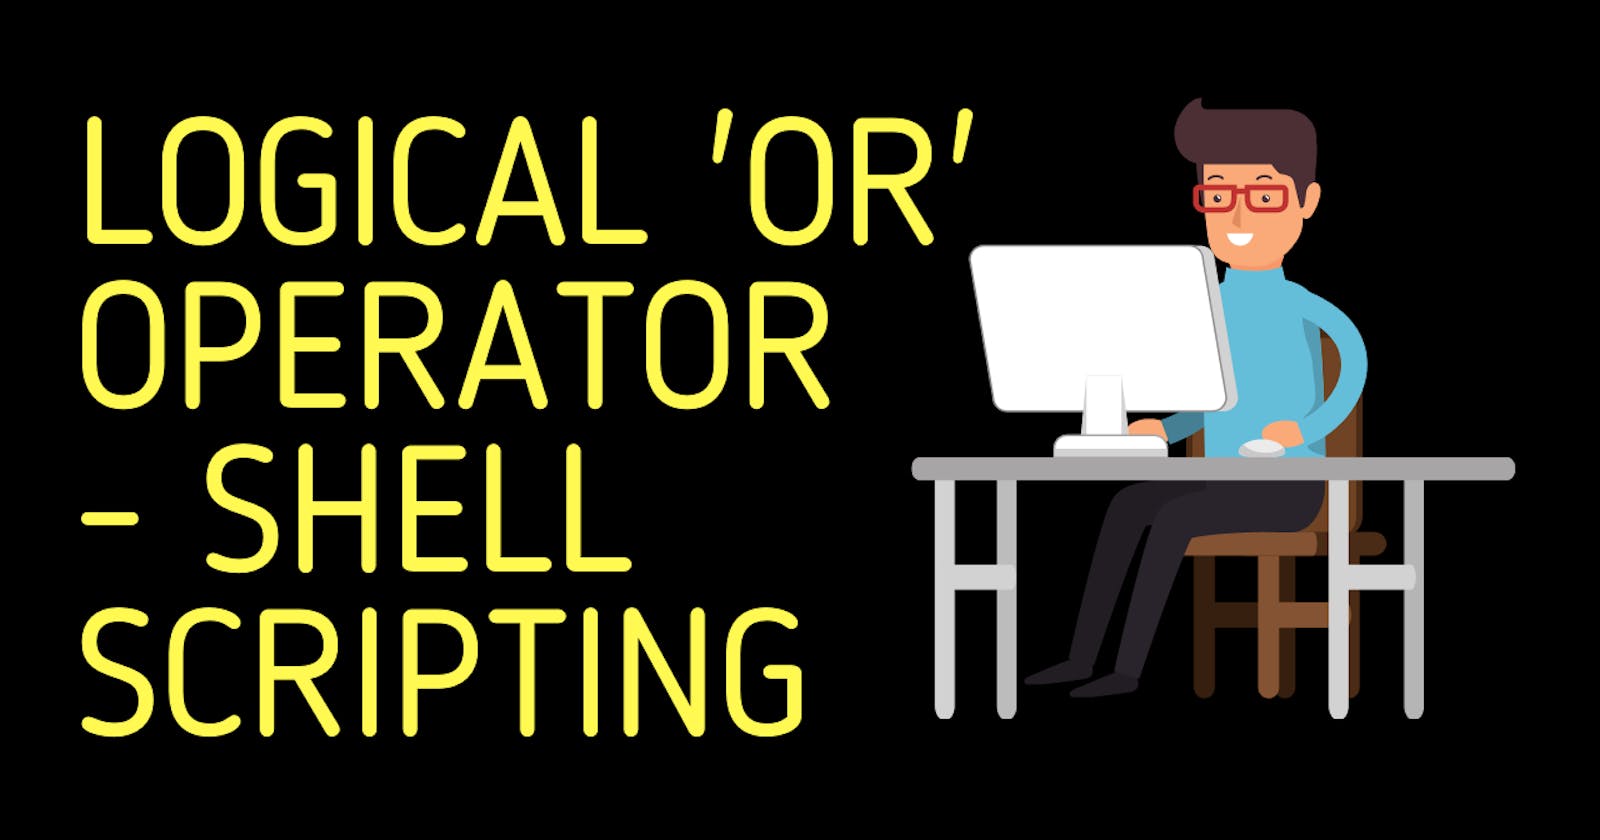 Logical 'OR' Operator | Shell Scripting